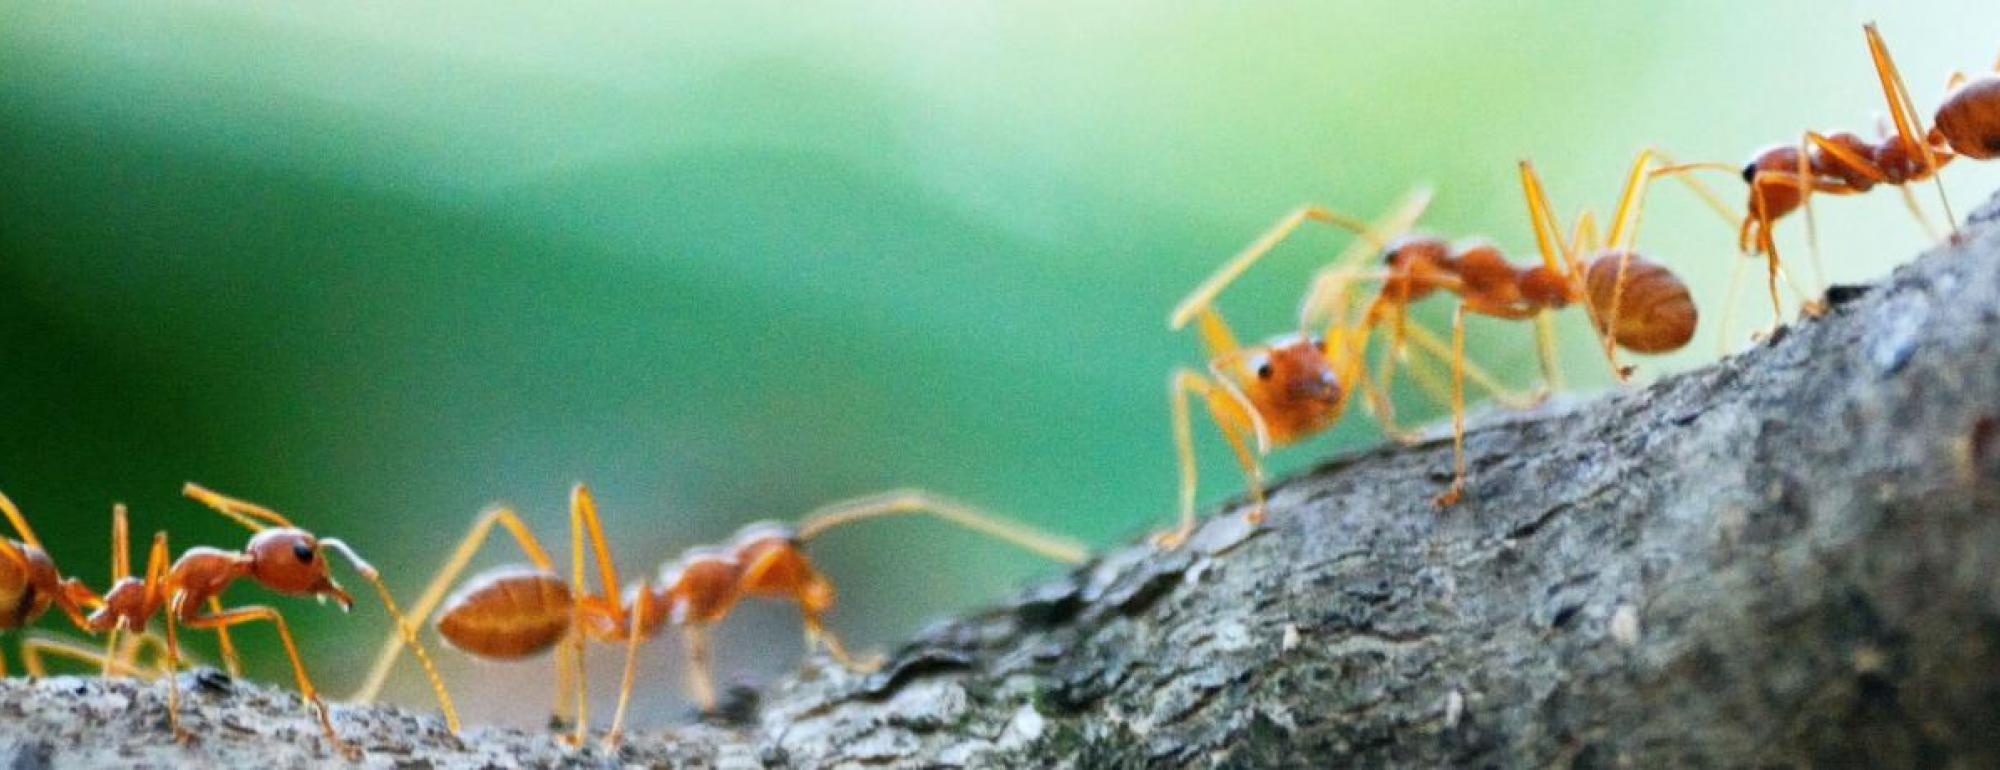 ants walk on bark